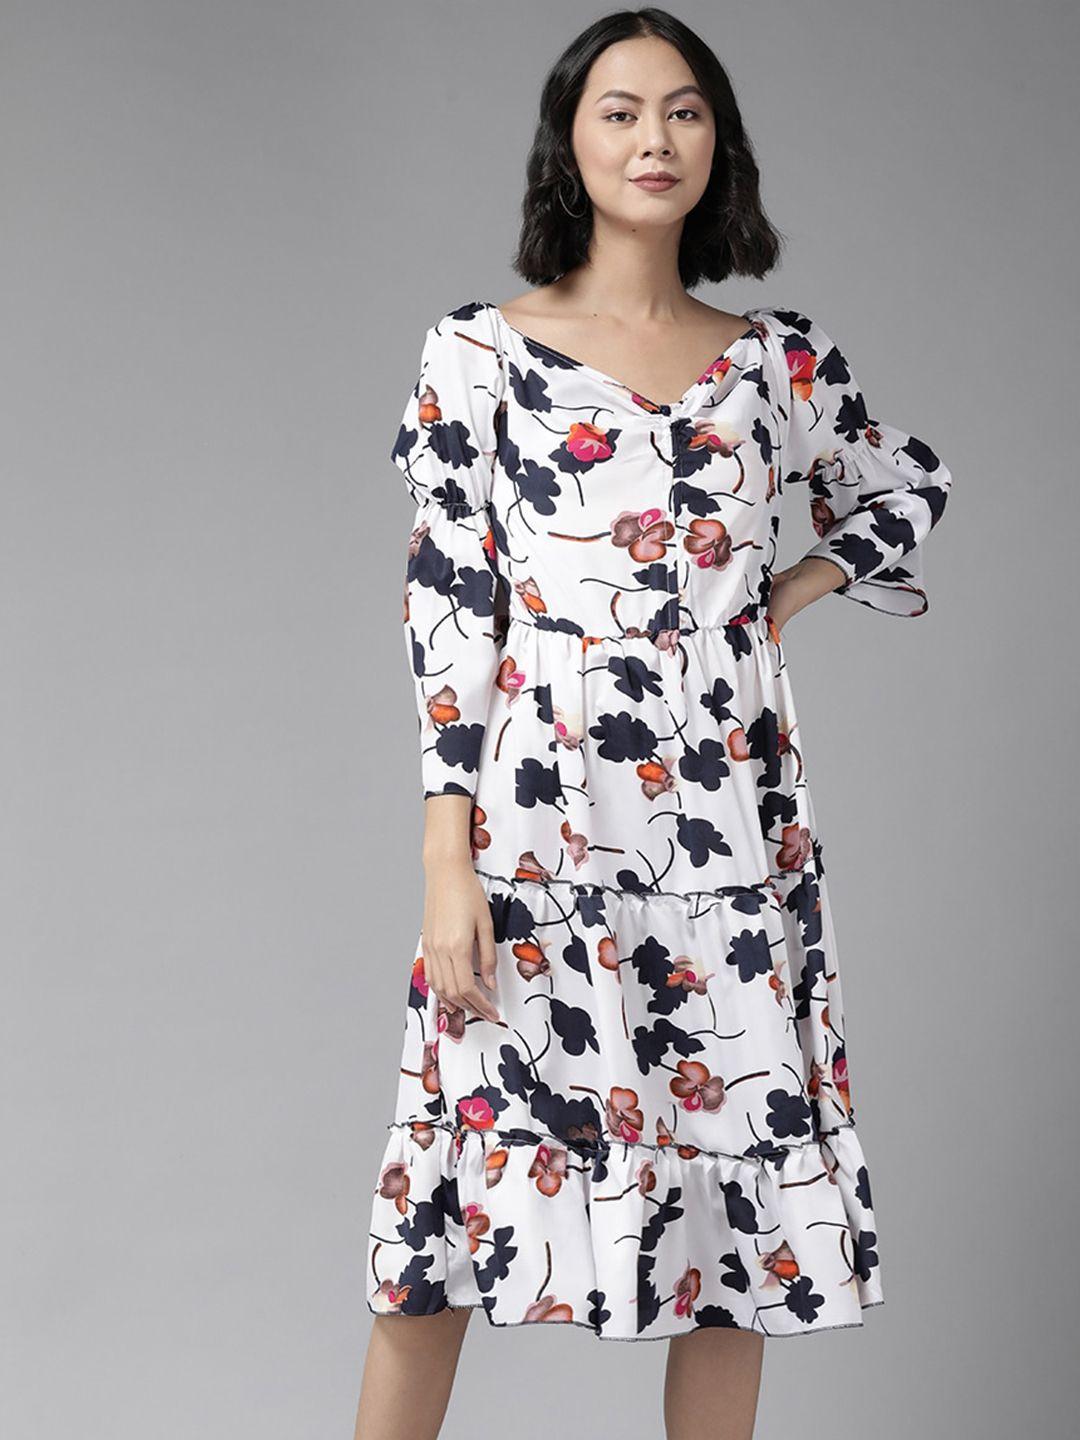 aarika-floral-printed-v-neck-bell-sleeve-empire-dress